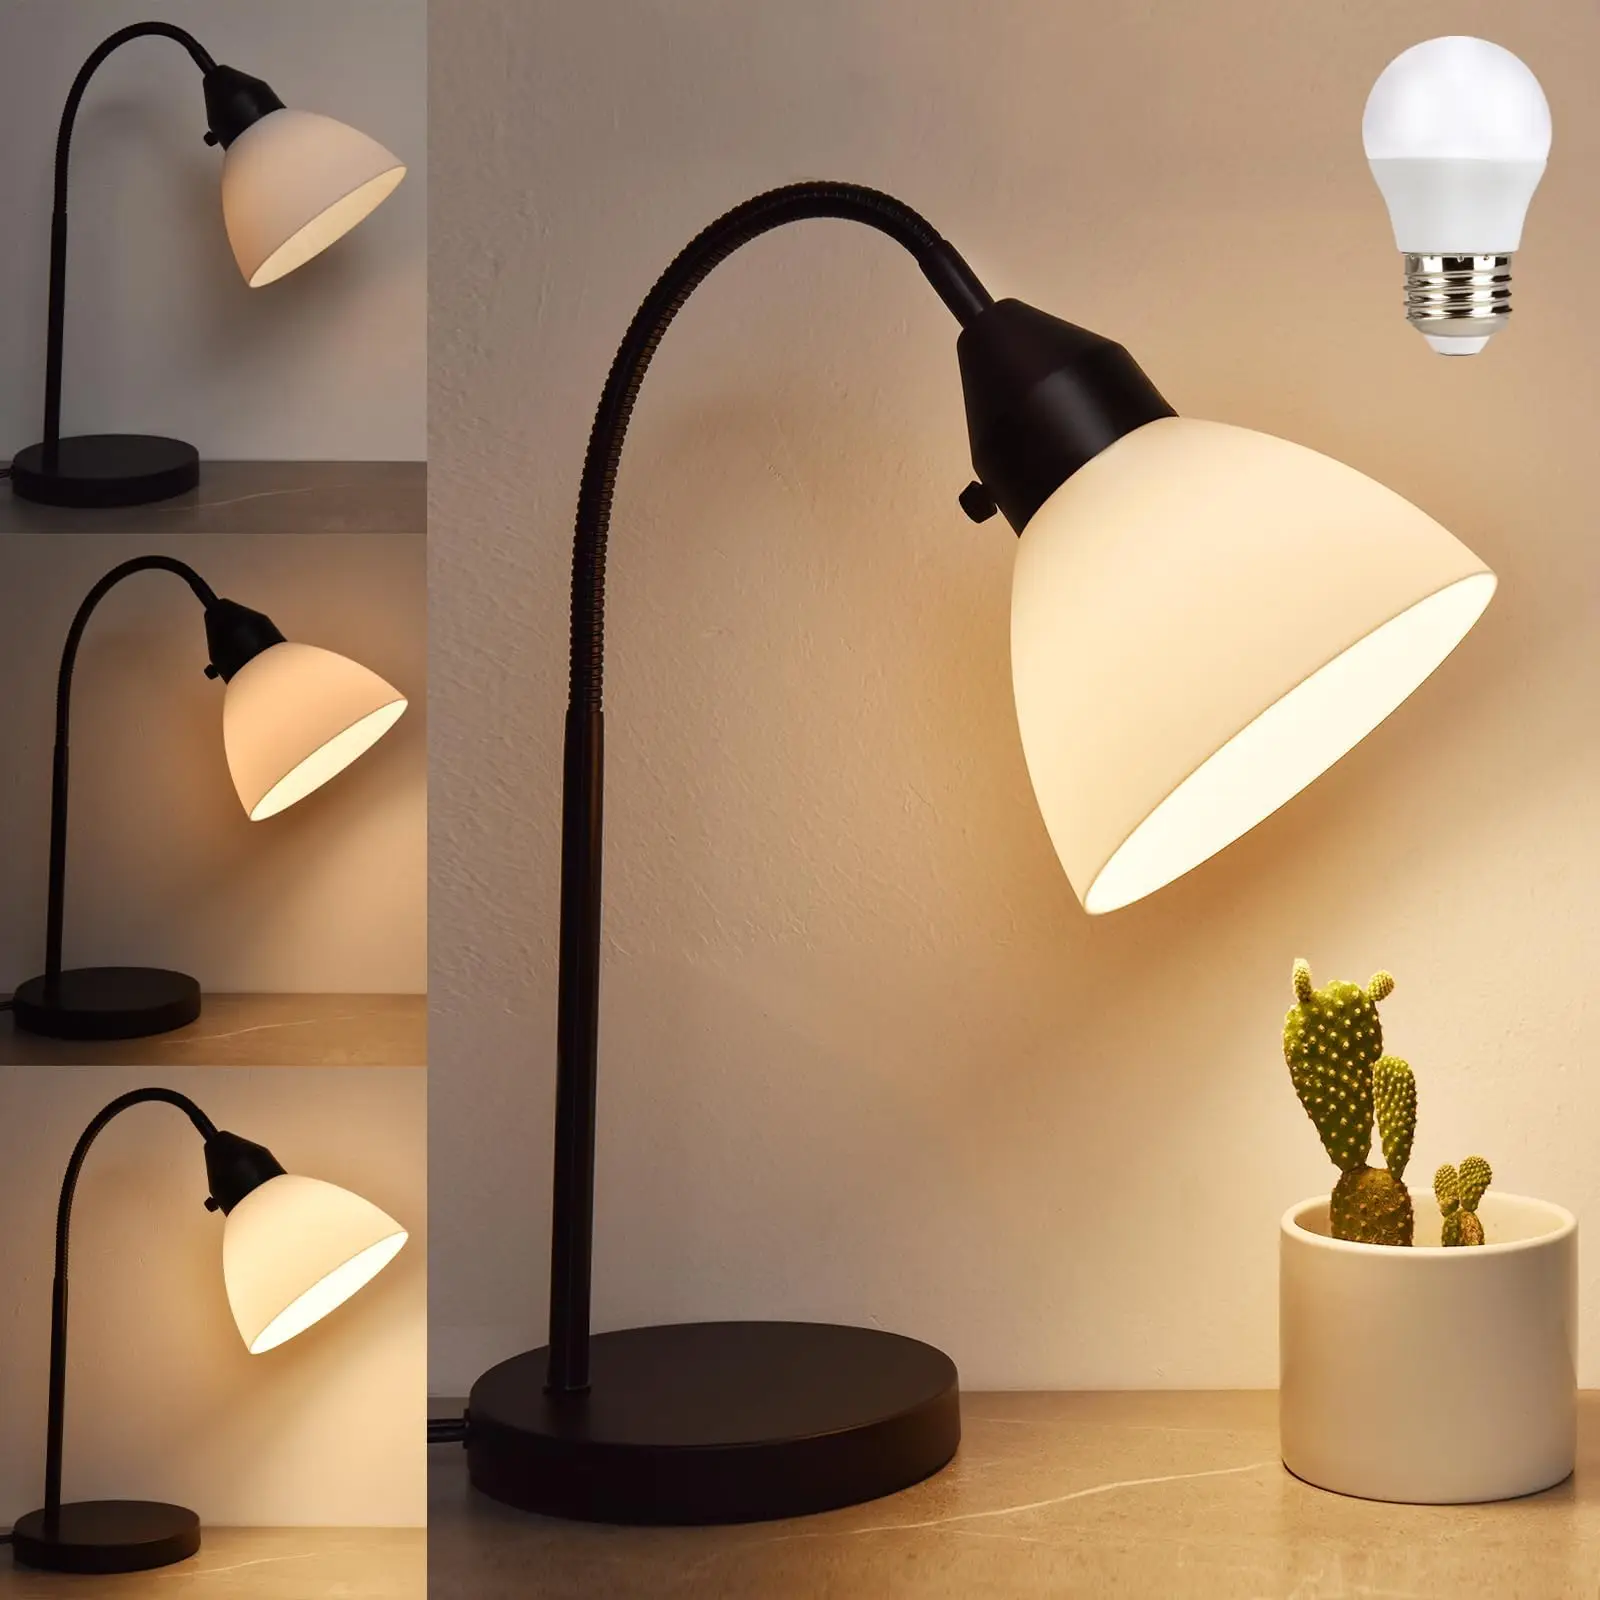 

LED Desk Lamp for Home Office 3 Levels Dimmable Reading Light Flexible Gooseneck Table Lamp for Bedside Office and Desk